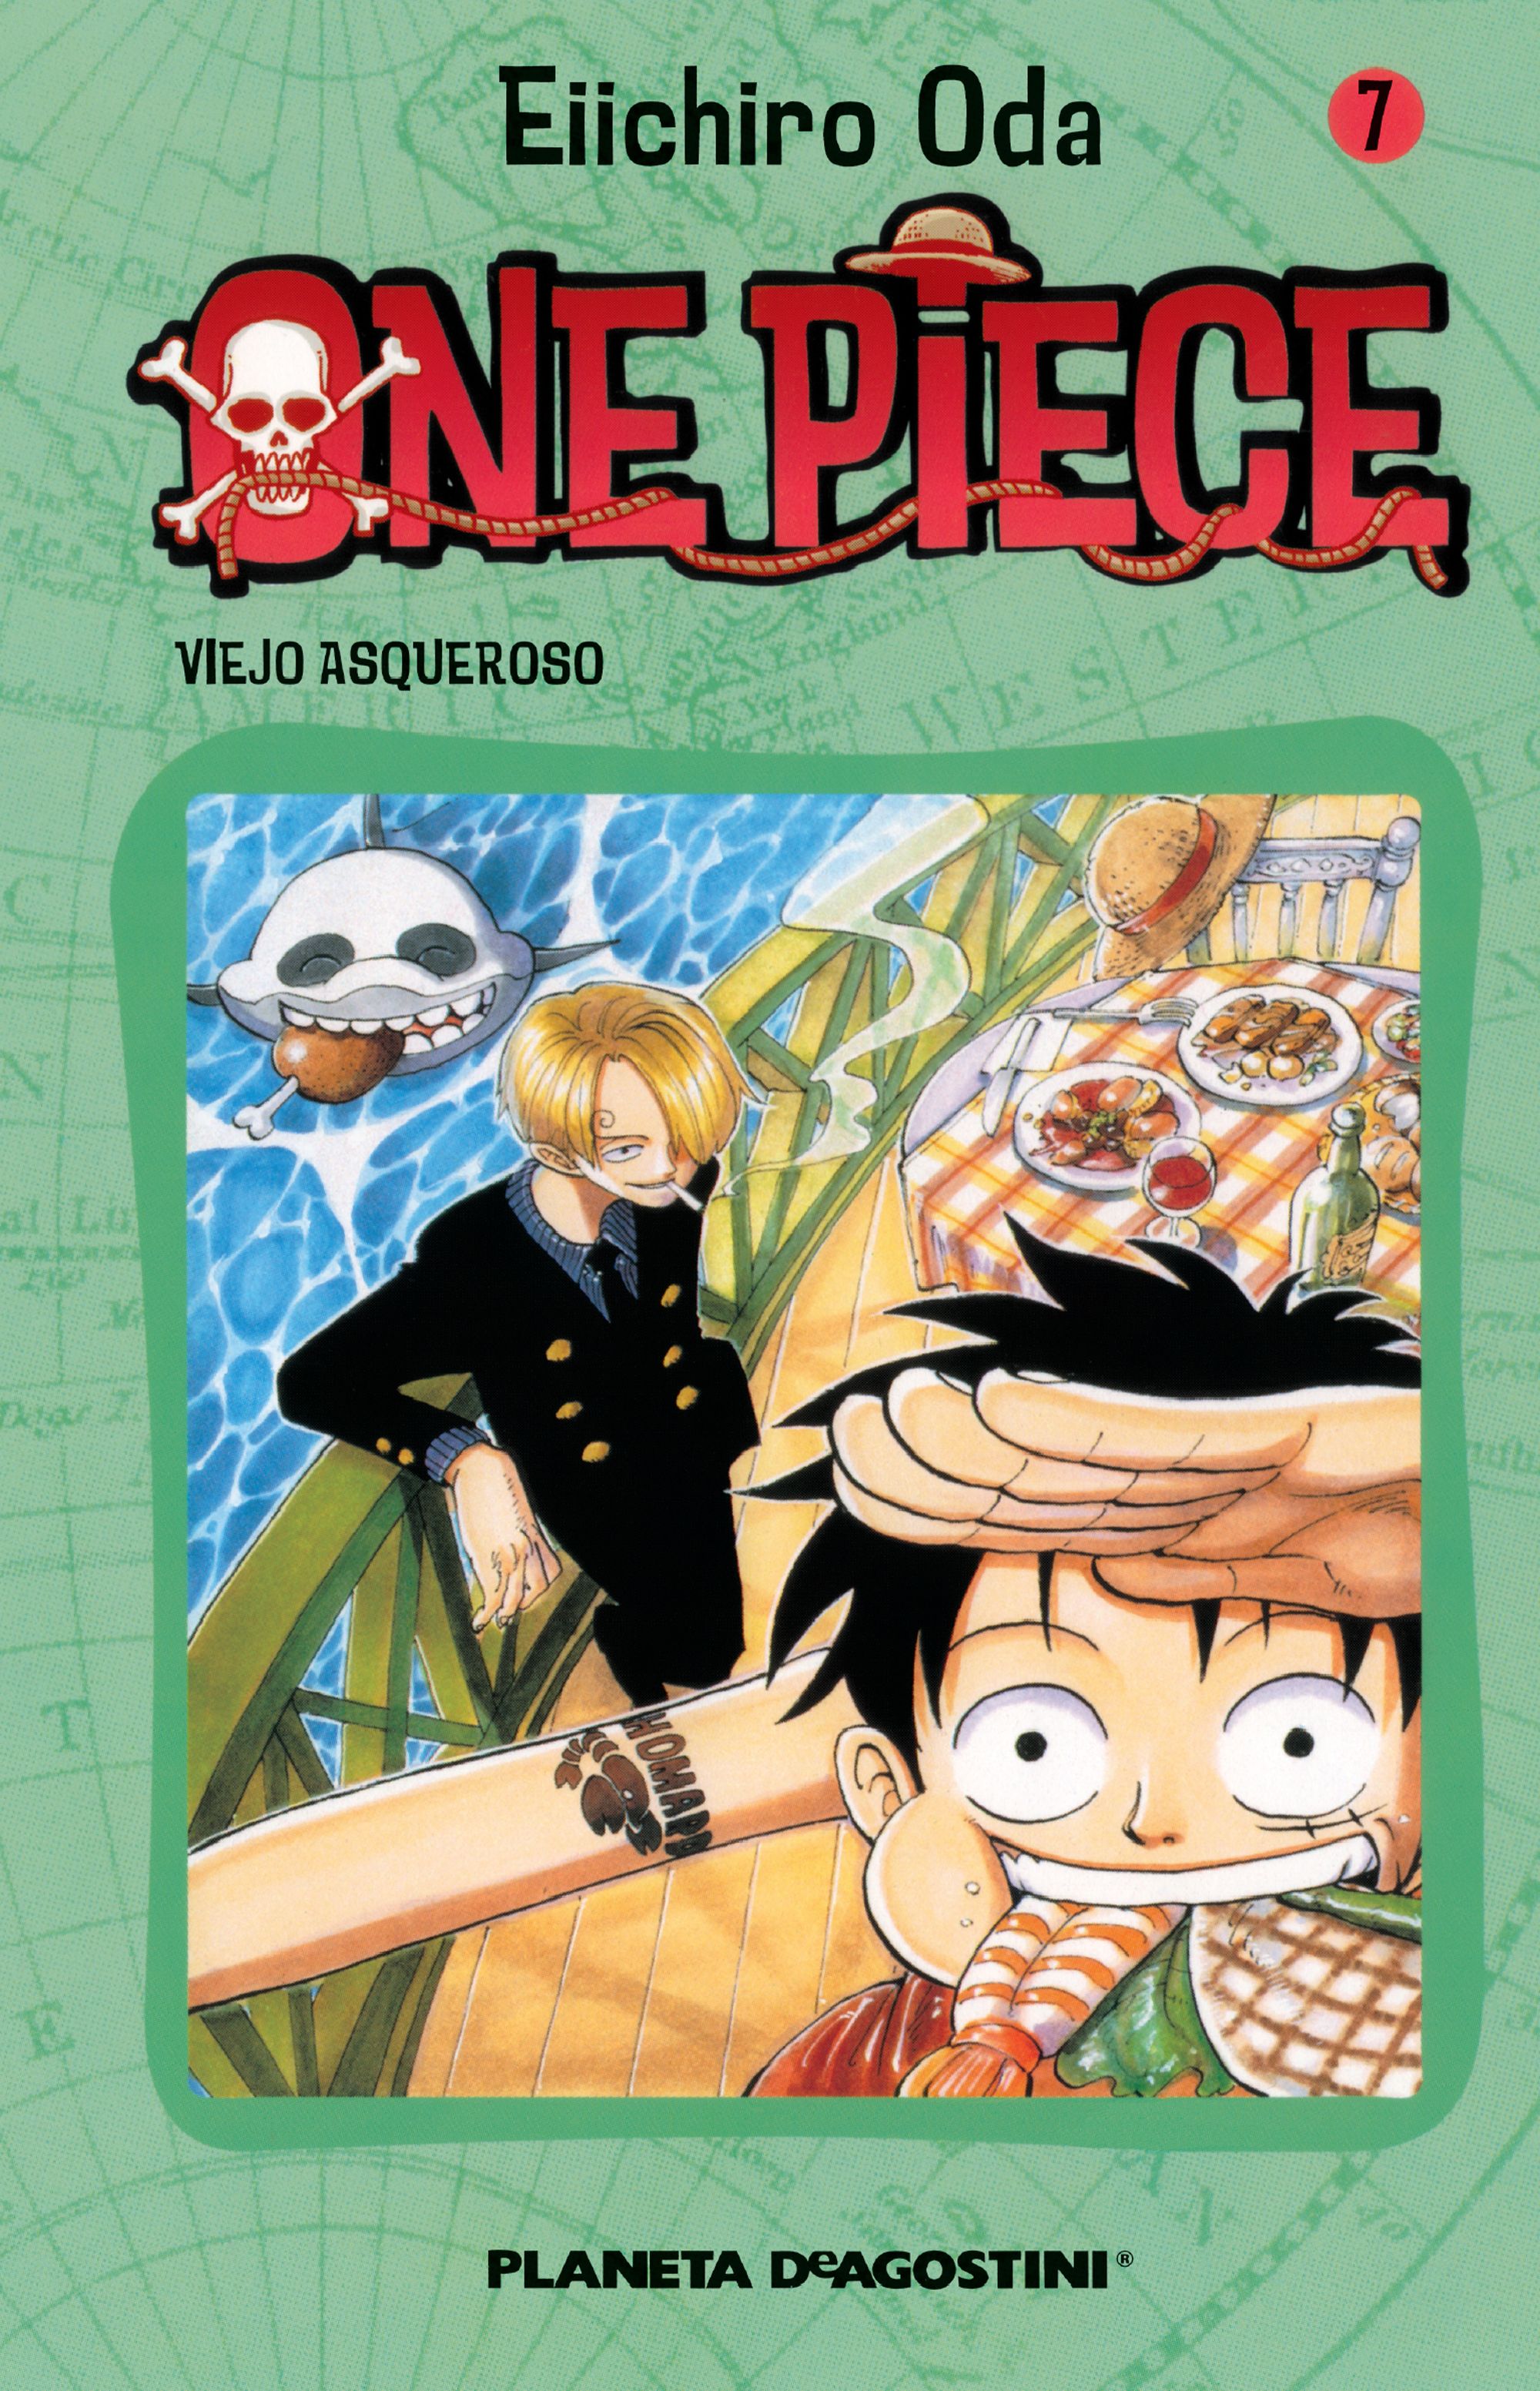 One Piece nº 07 Universo Funko Planeta de cómics mangas juegos de